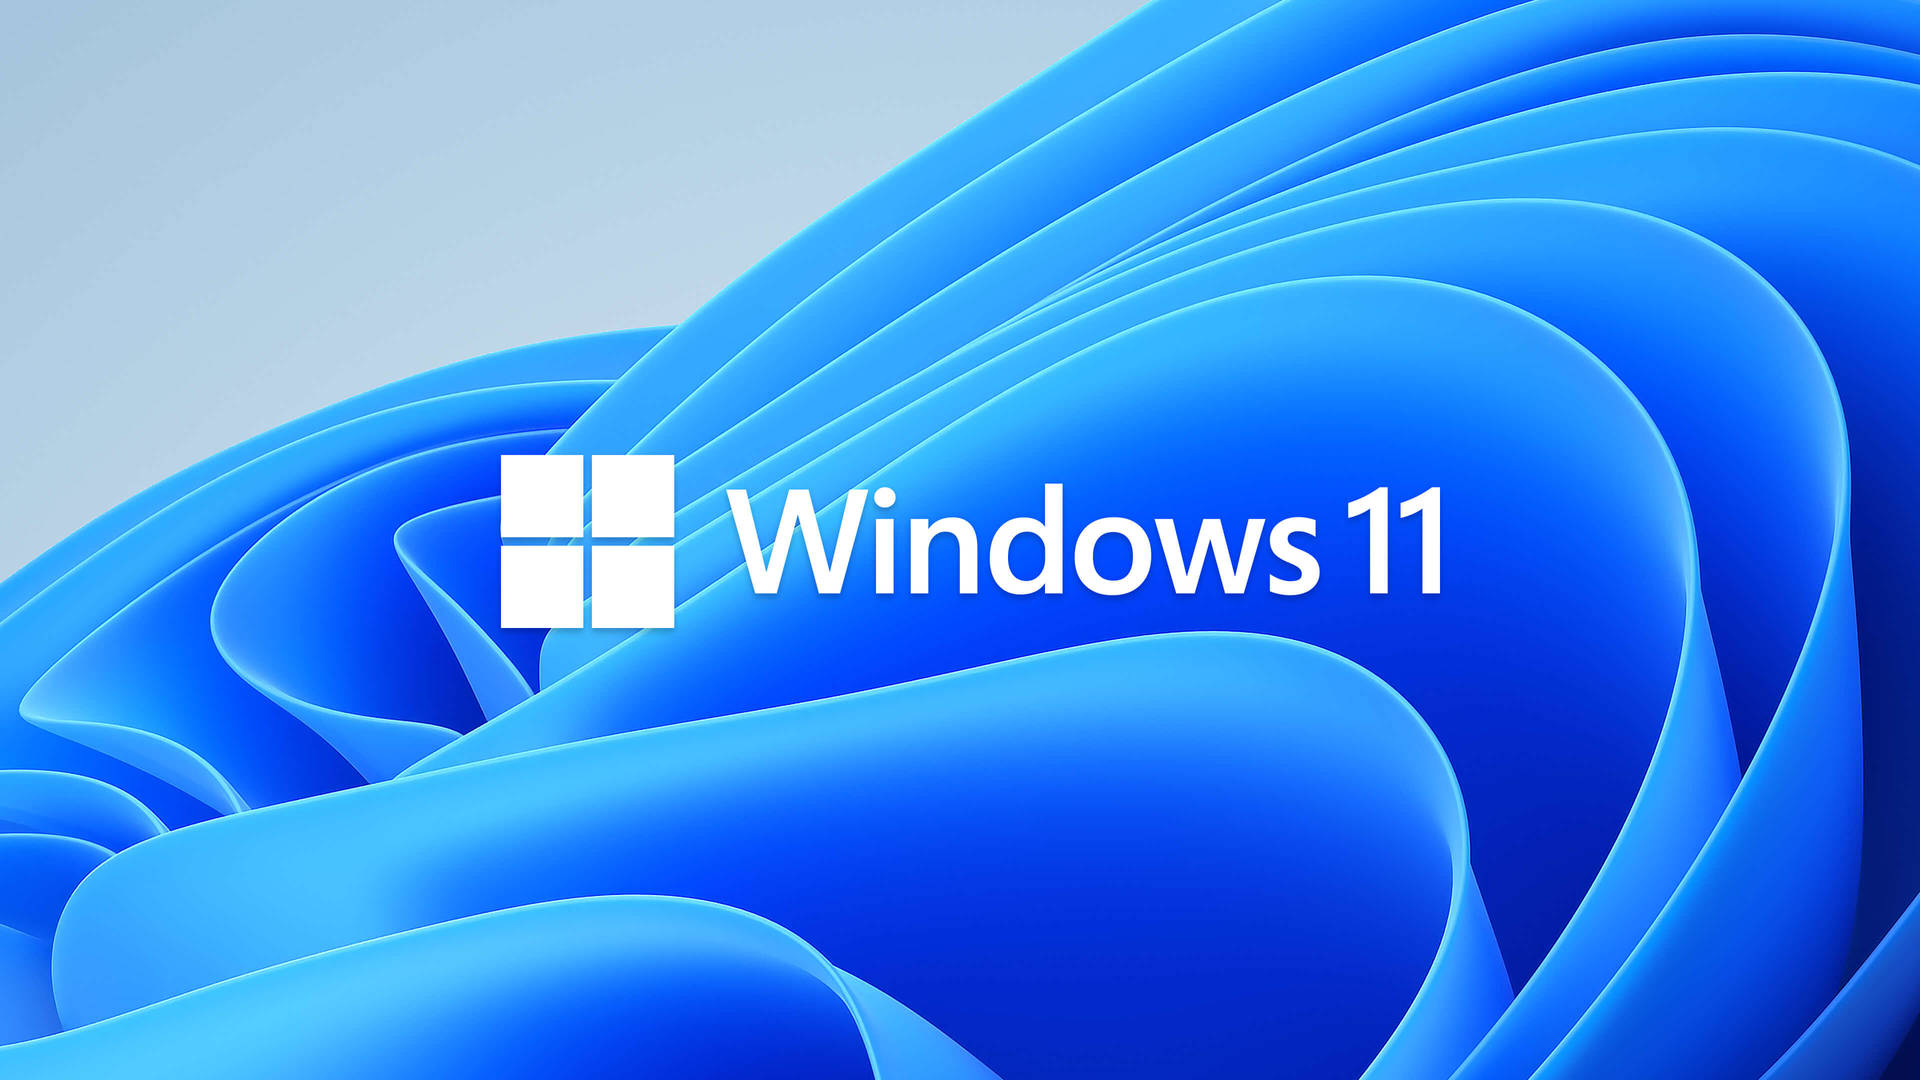 Windows 10 Wallpaper 4K Dark Blue background Technology 733